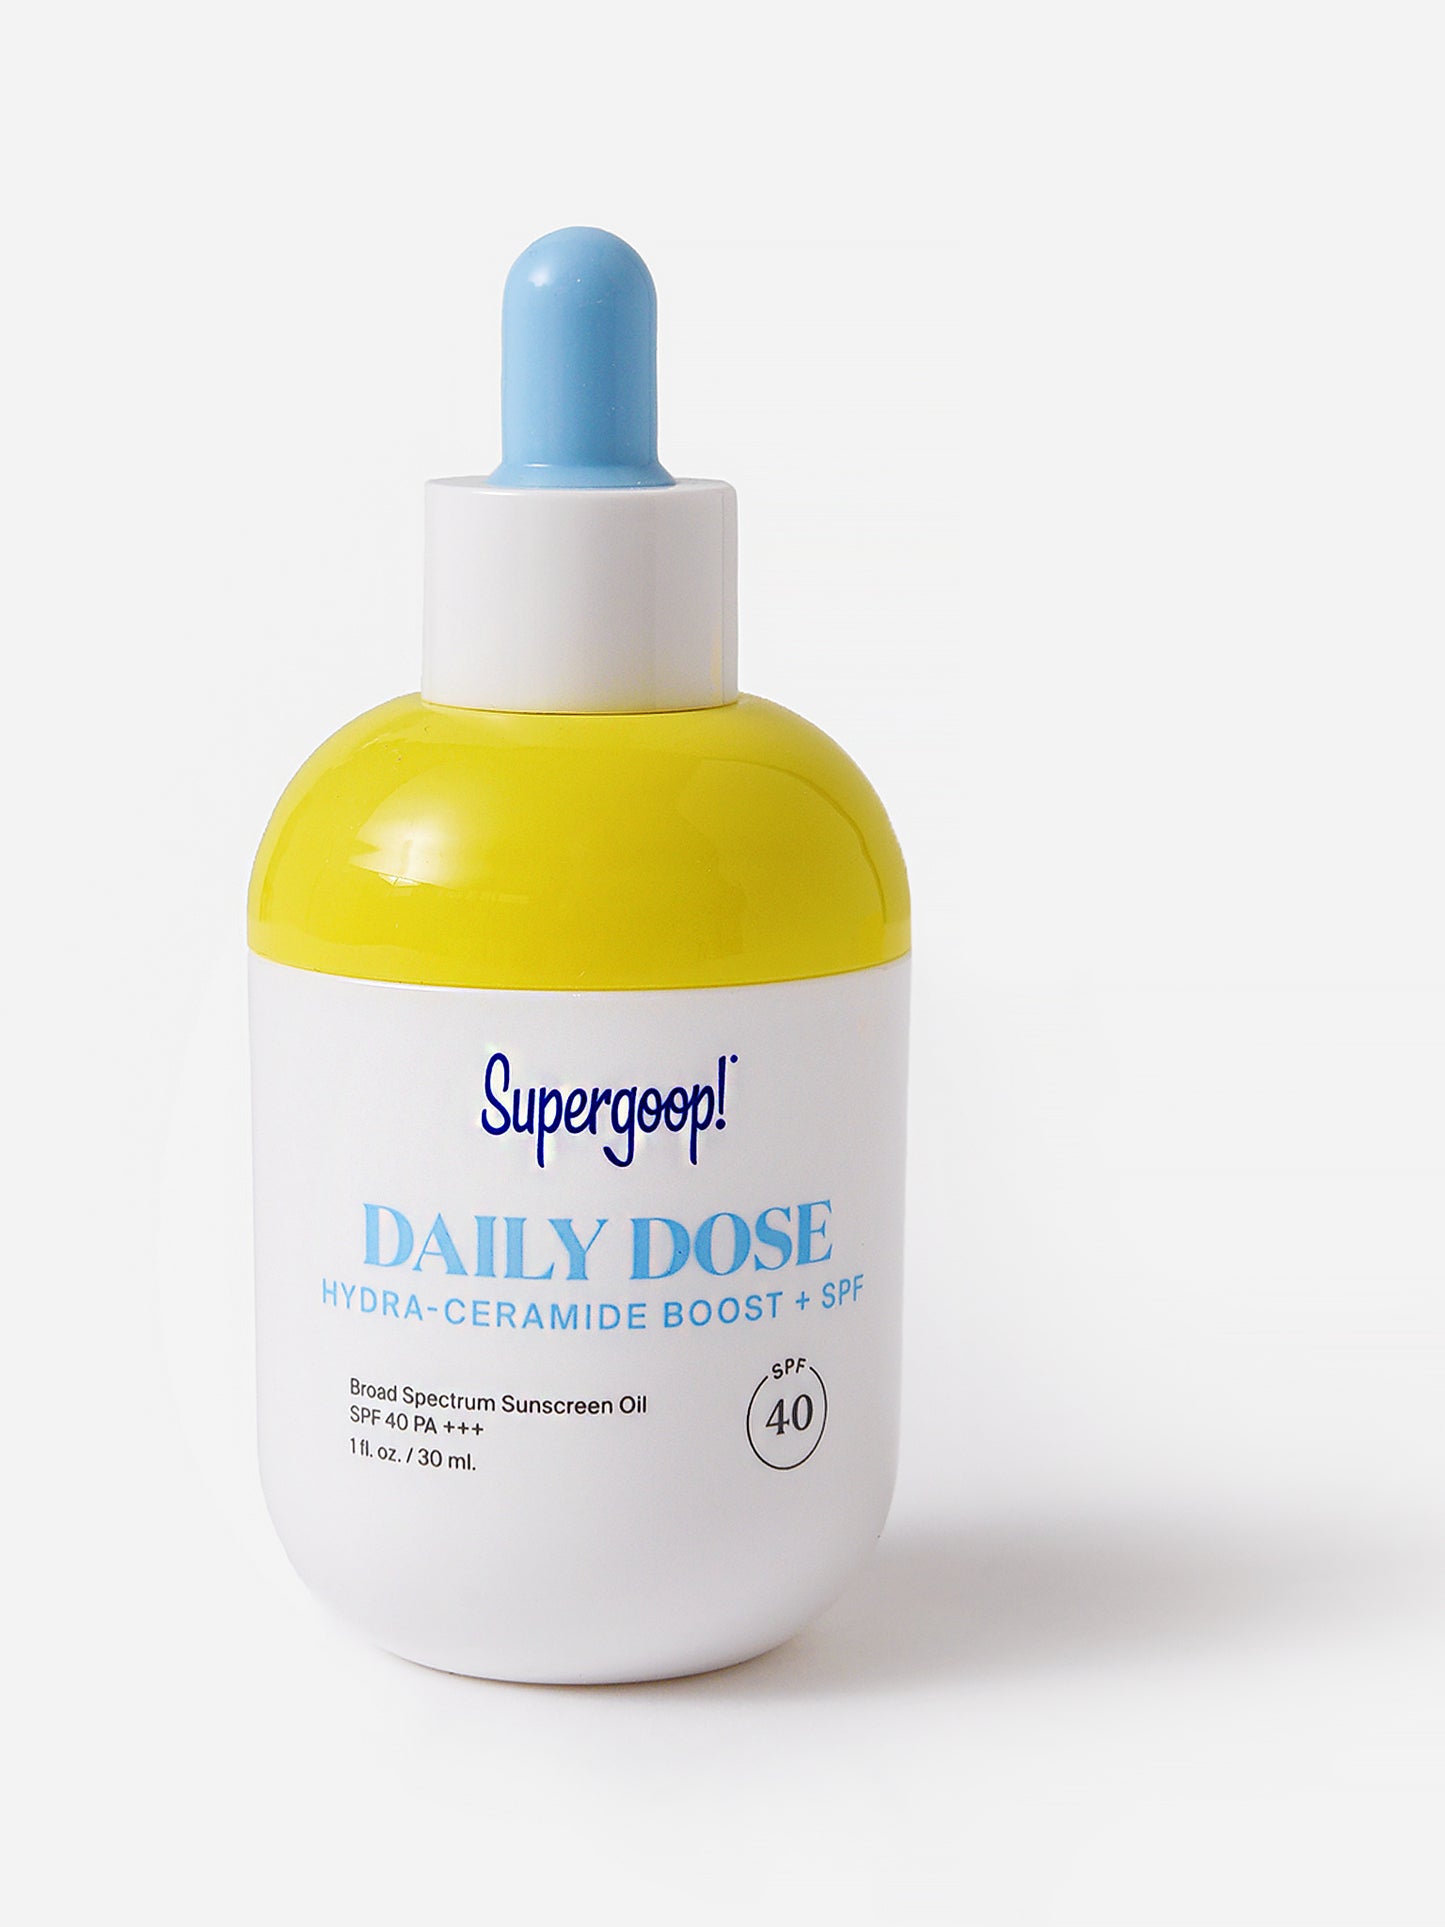 Supergoop Daily Dose Hydra-Ceramide Boost SPF 40 Oil